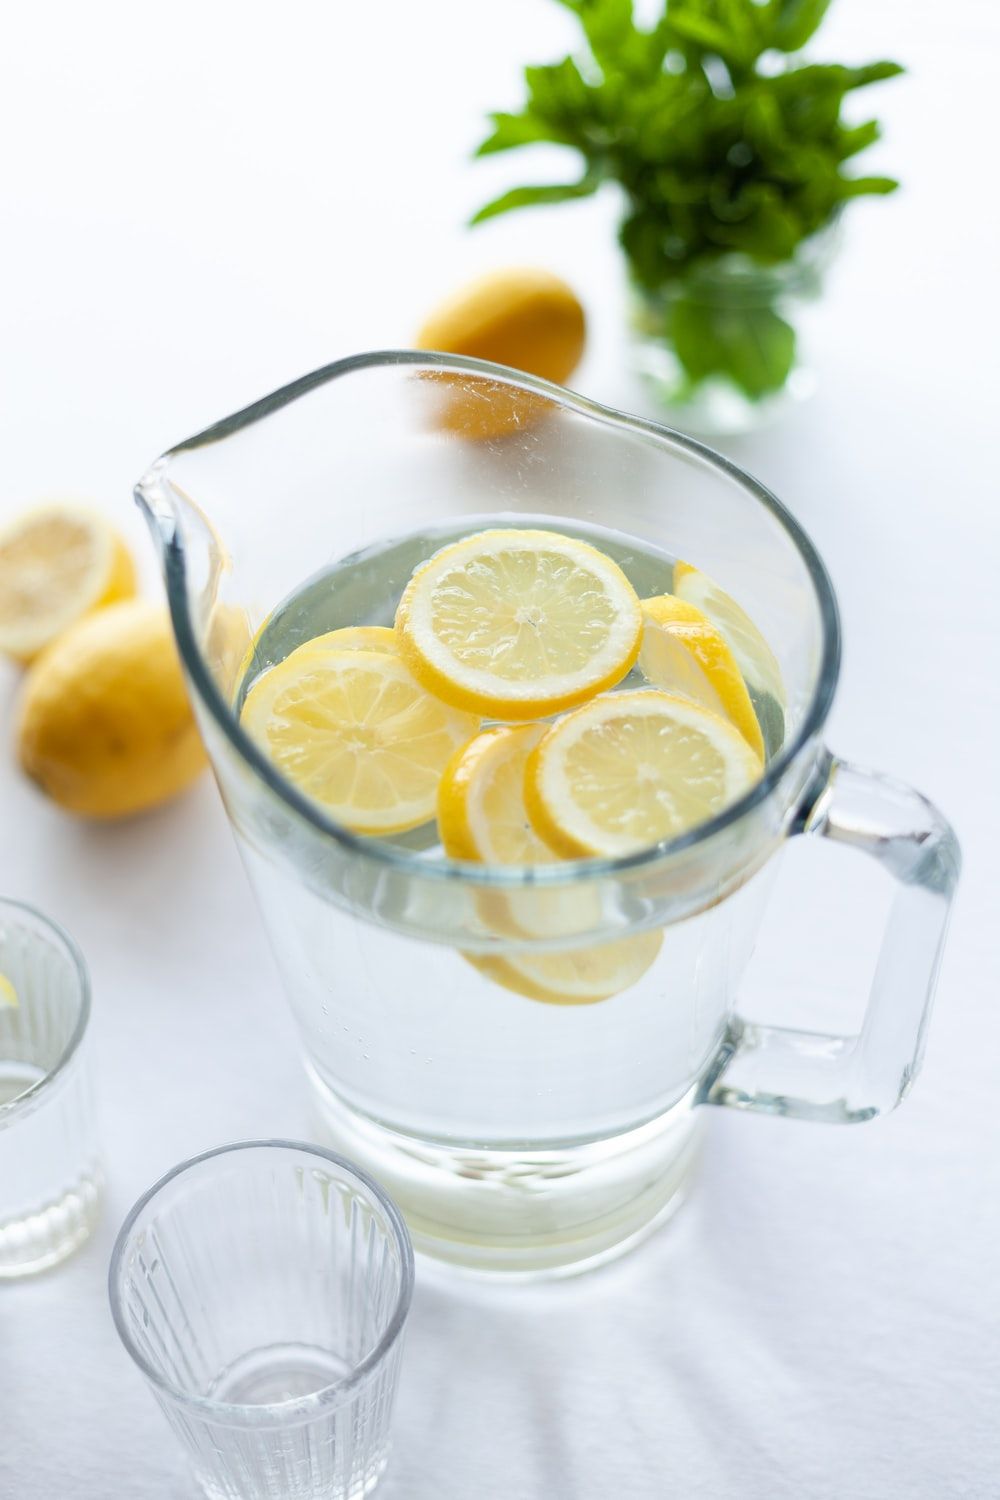 Lemon Water Picture. Download Free Image